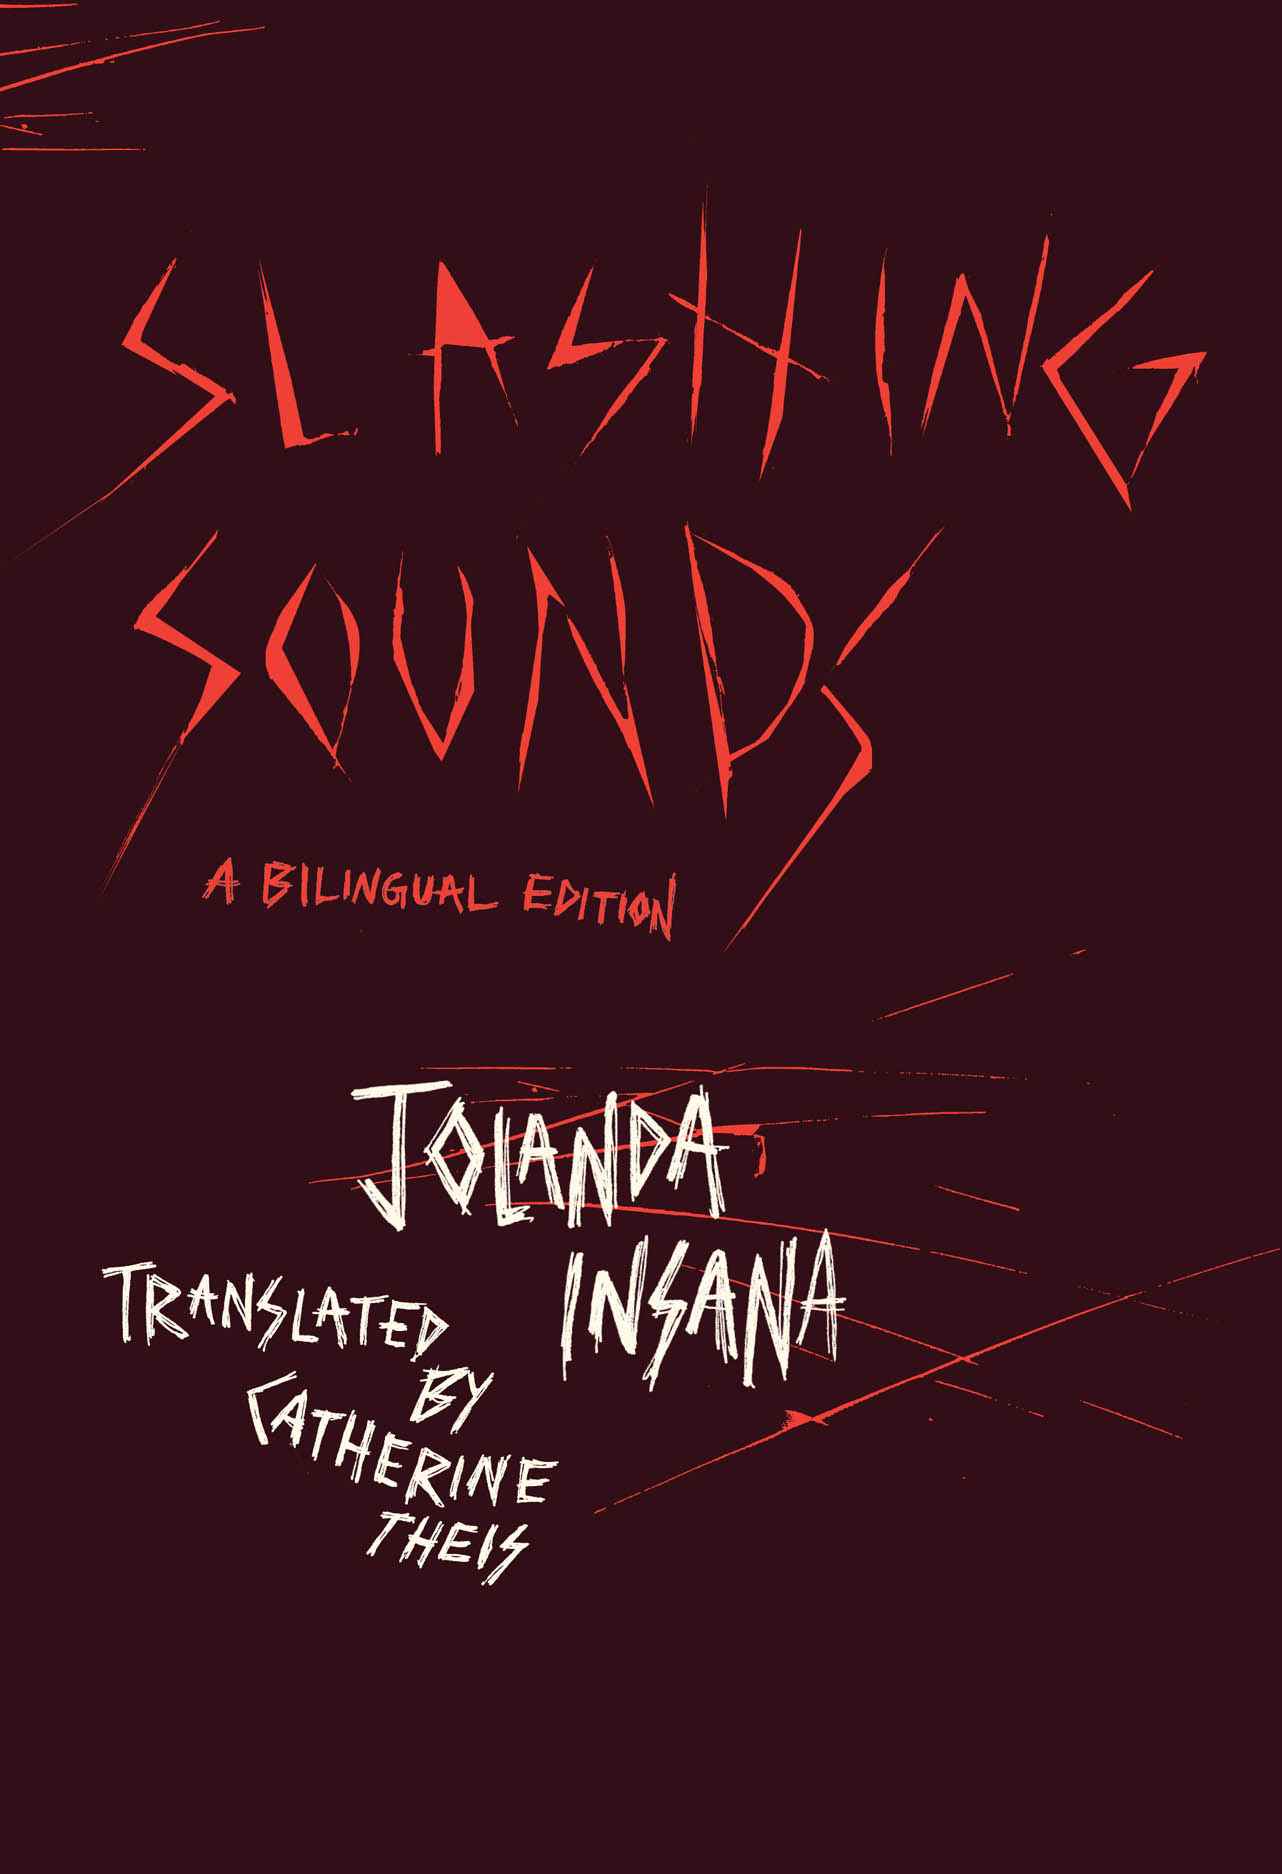 Meet Catherine Theis, Translator of Italian poet Jolanda Insana’s “Slashing Sounds”